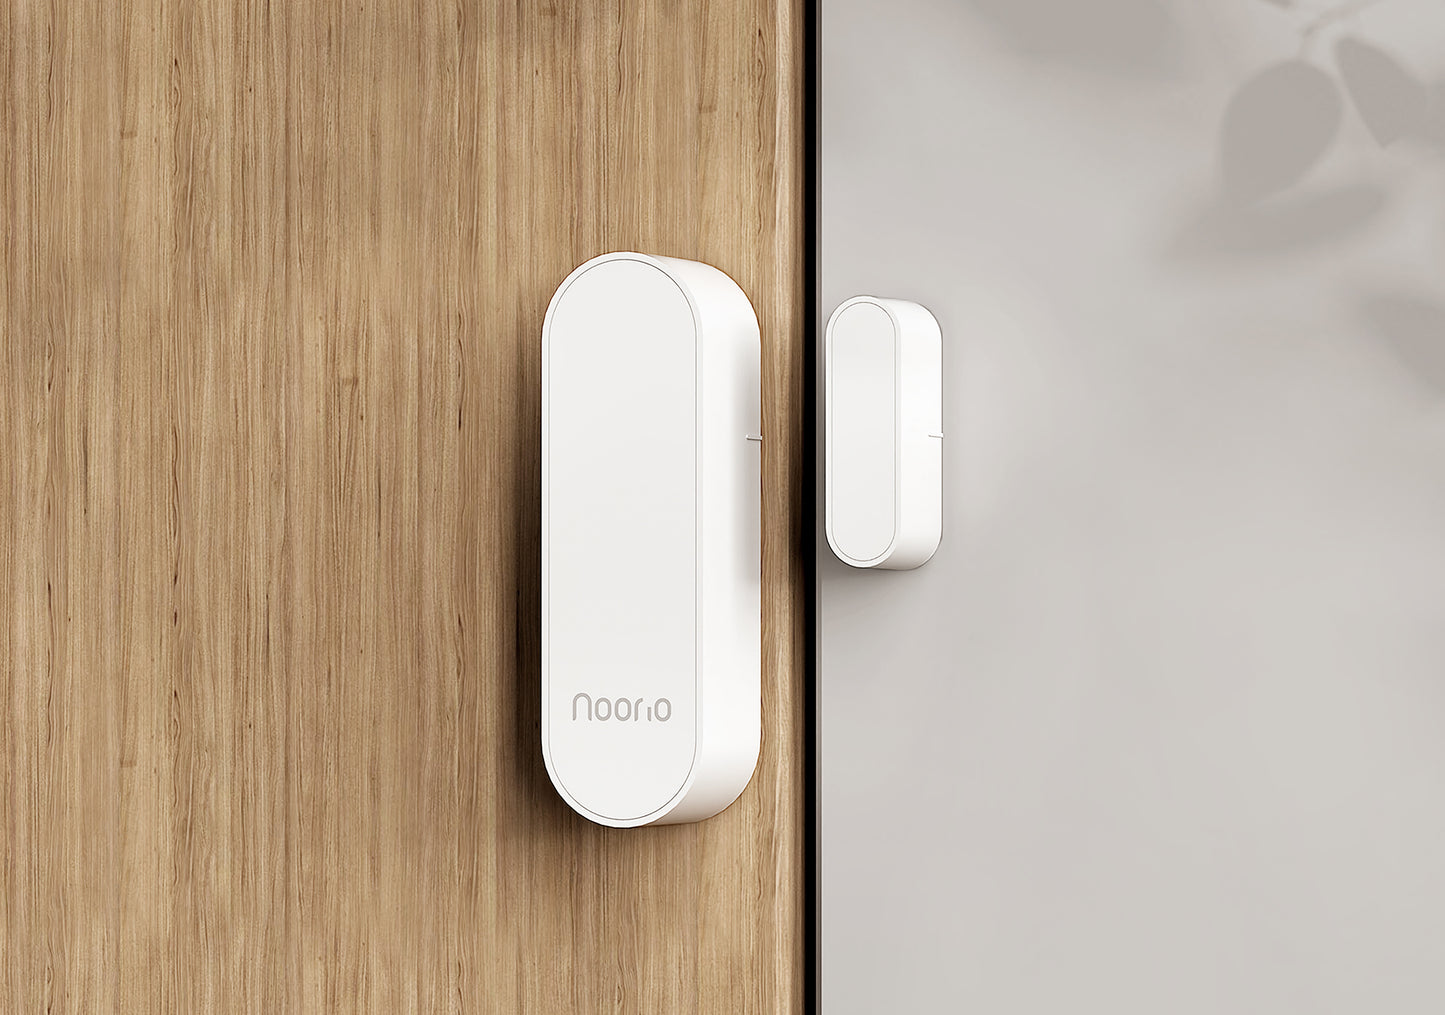 noorio wireless contact sensor works with smarthub